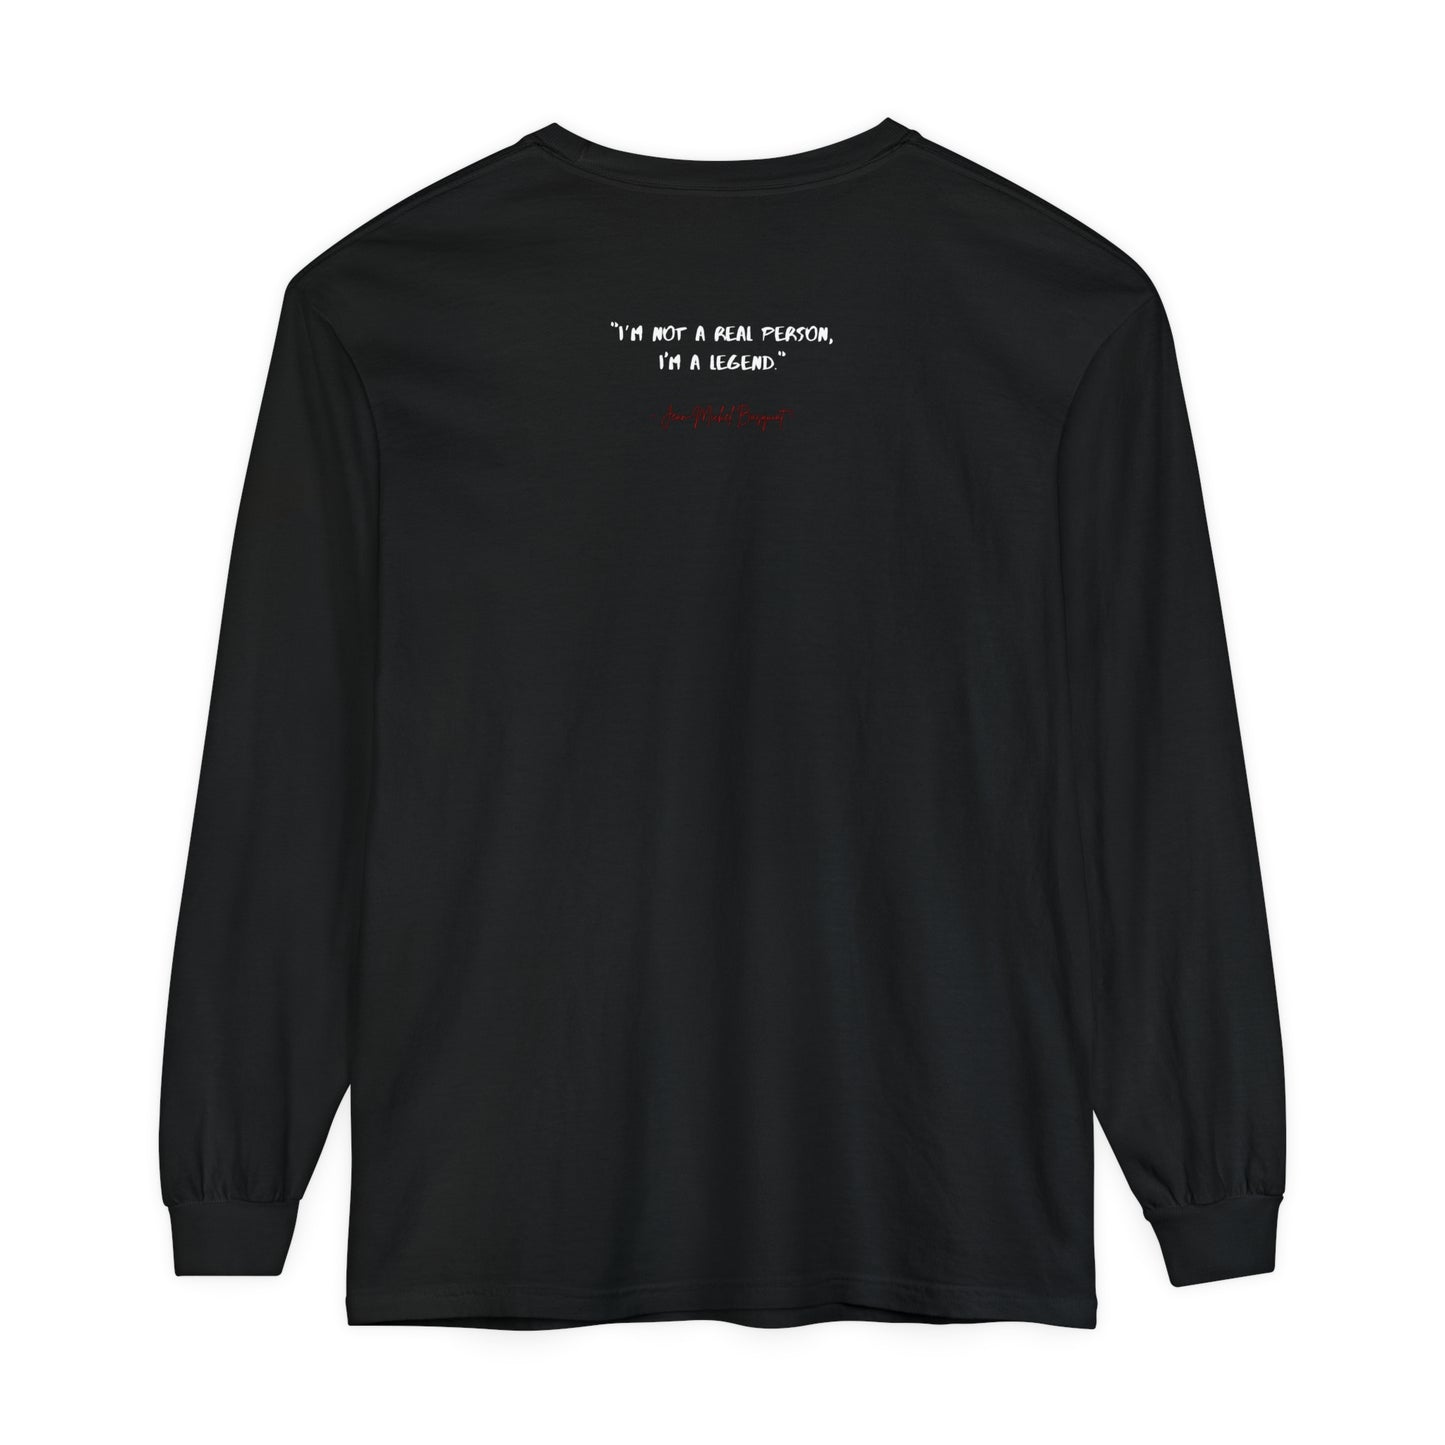 Basquiat Inspired Long Sleeve Cotton T-Shirt